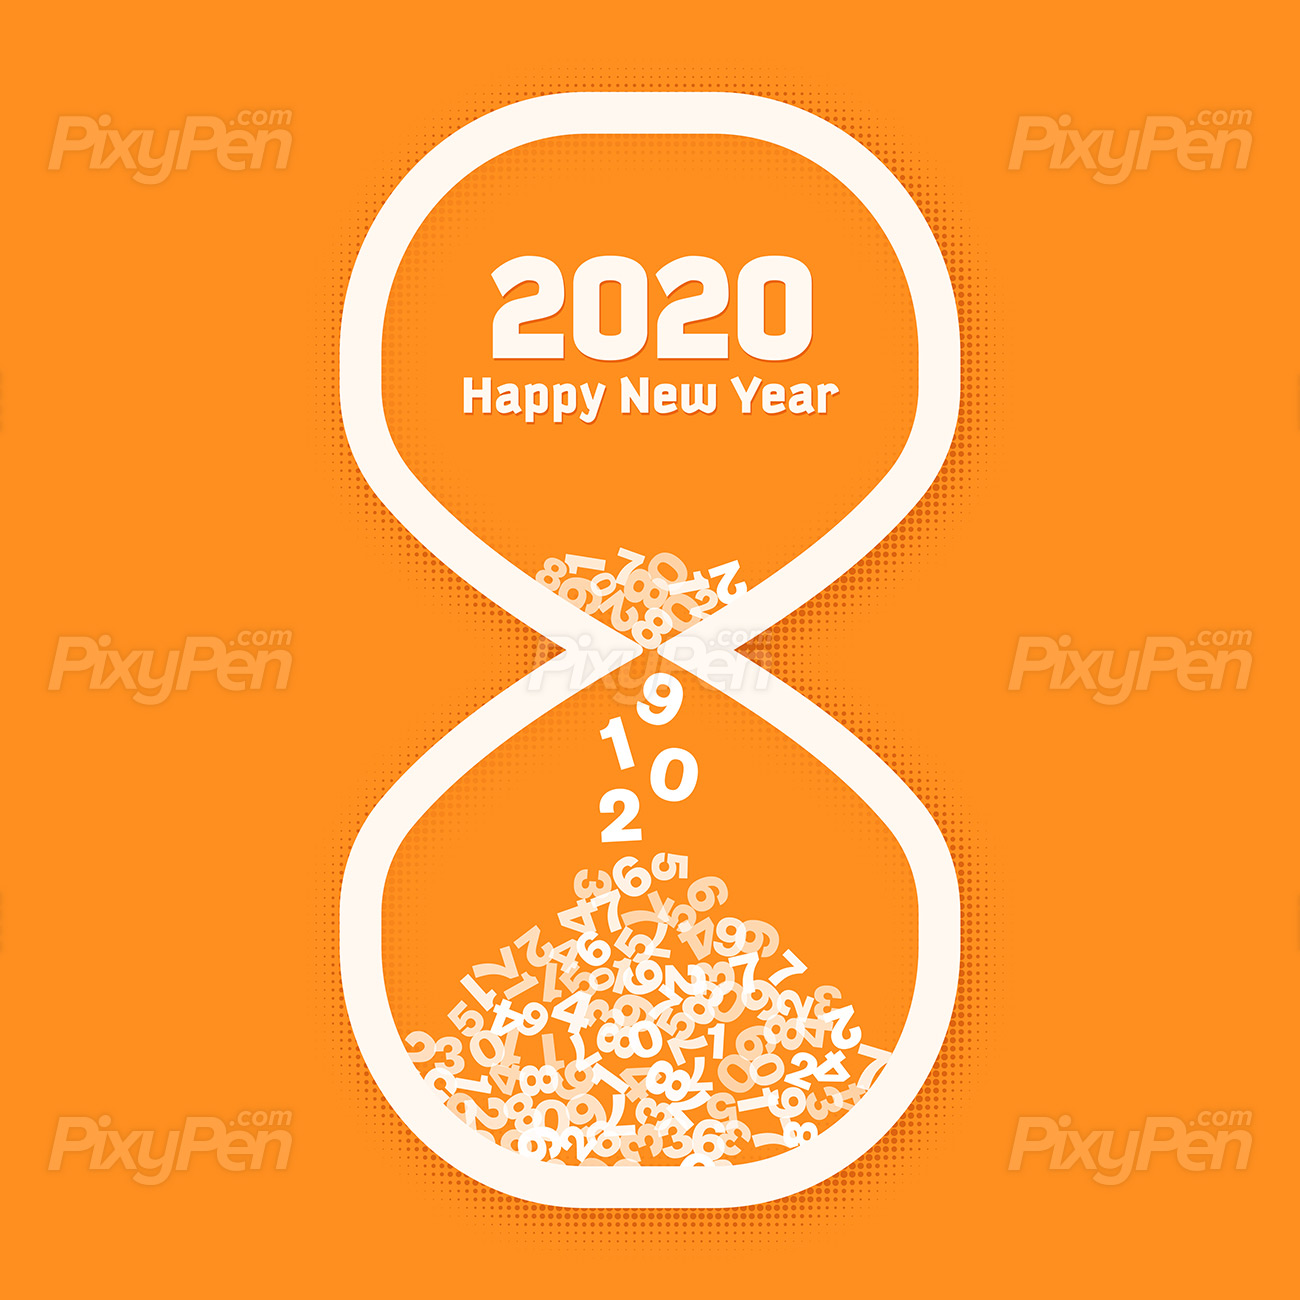 Happy New Year Jpeg Image Wallpaper Background